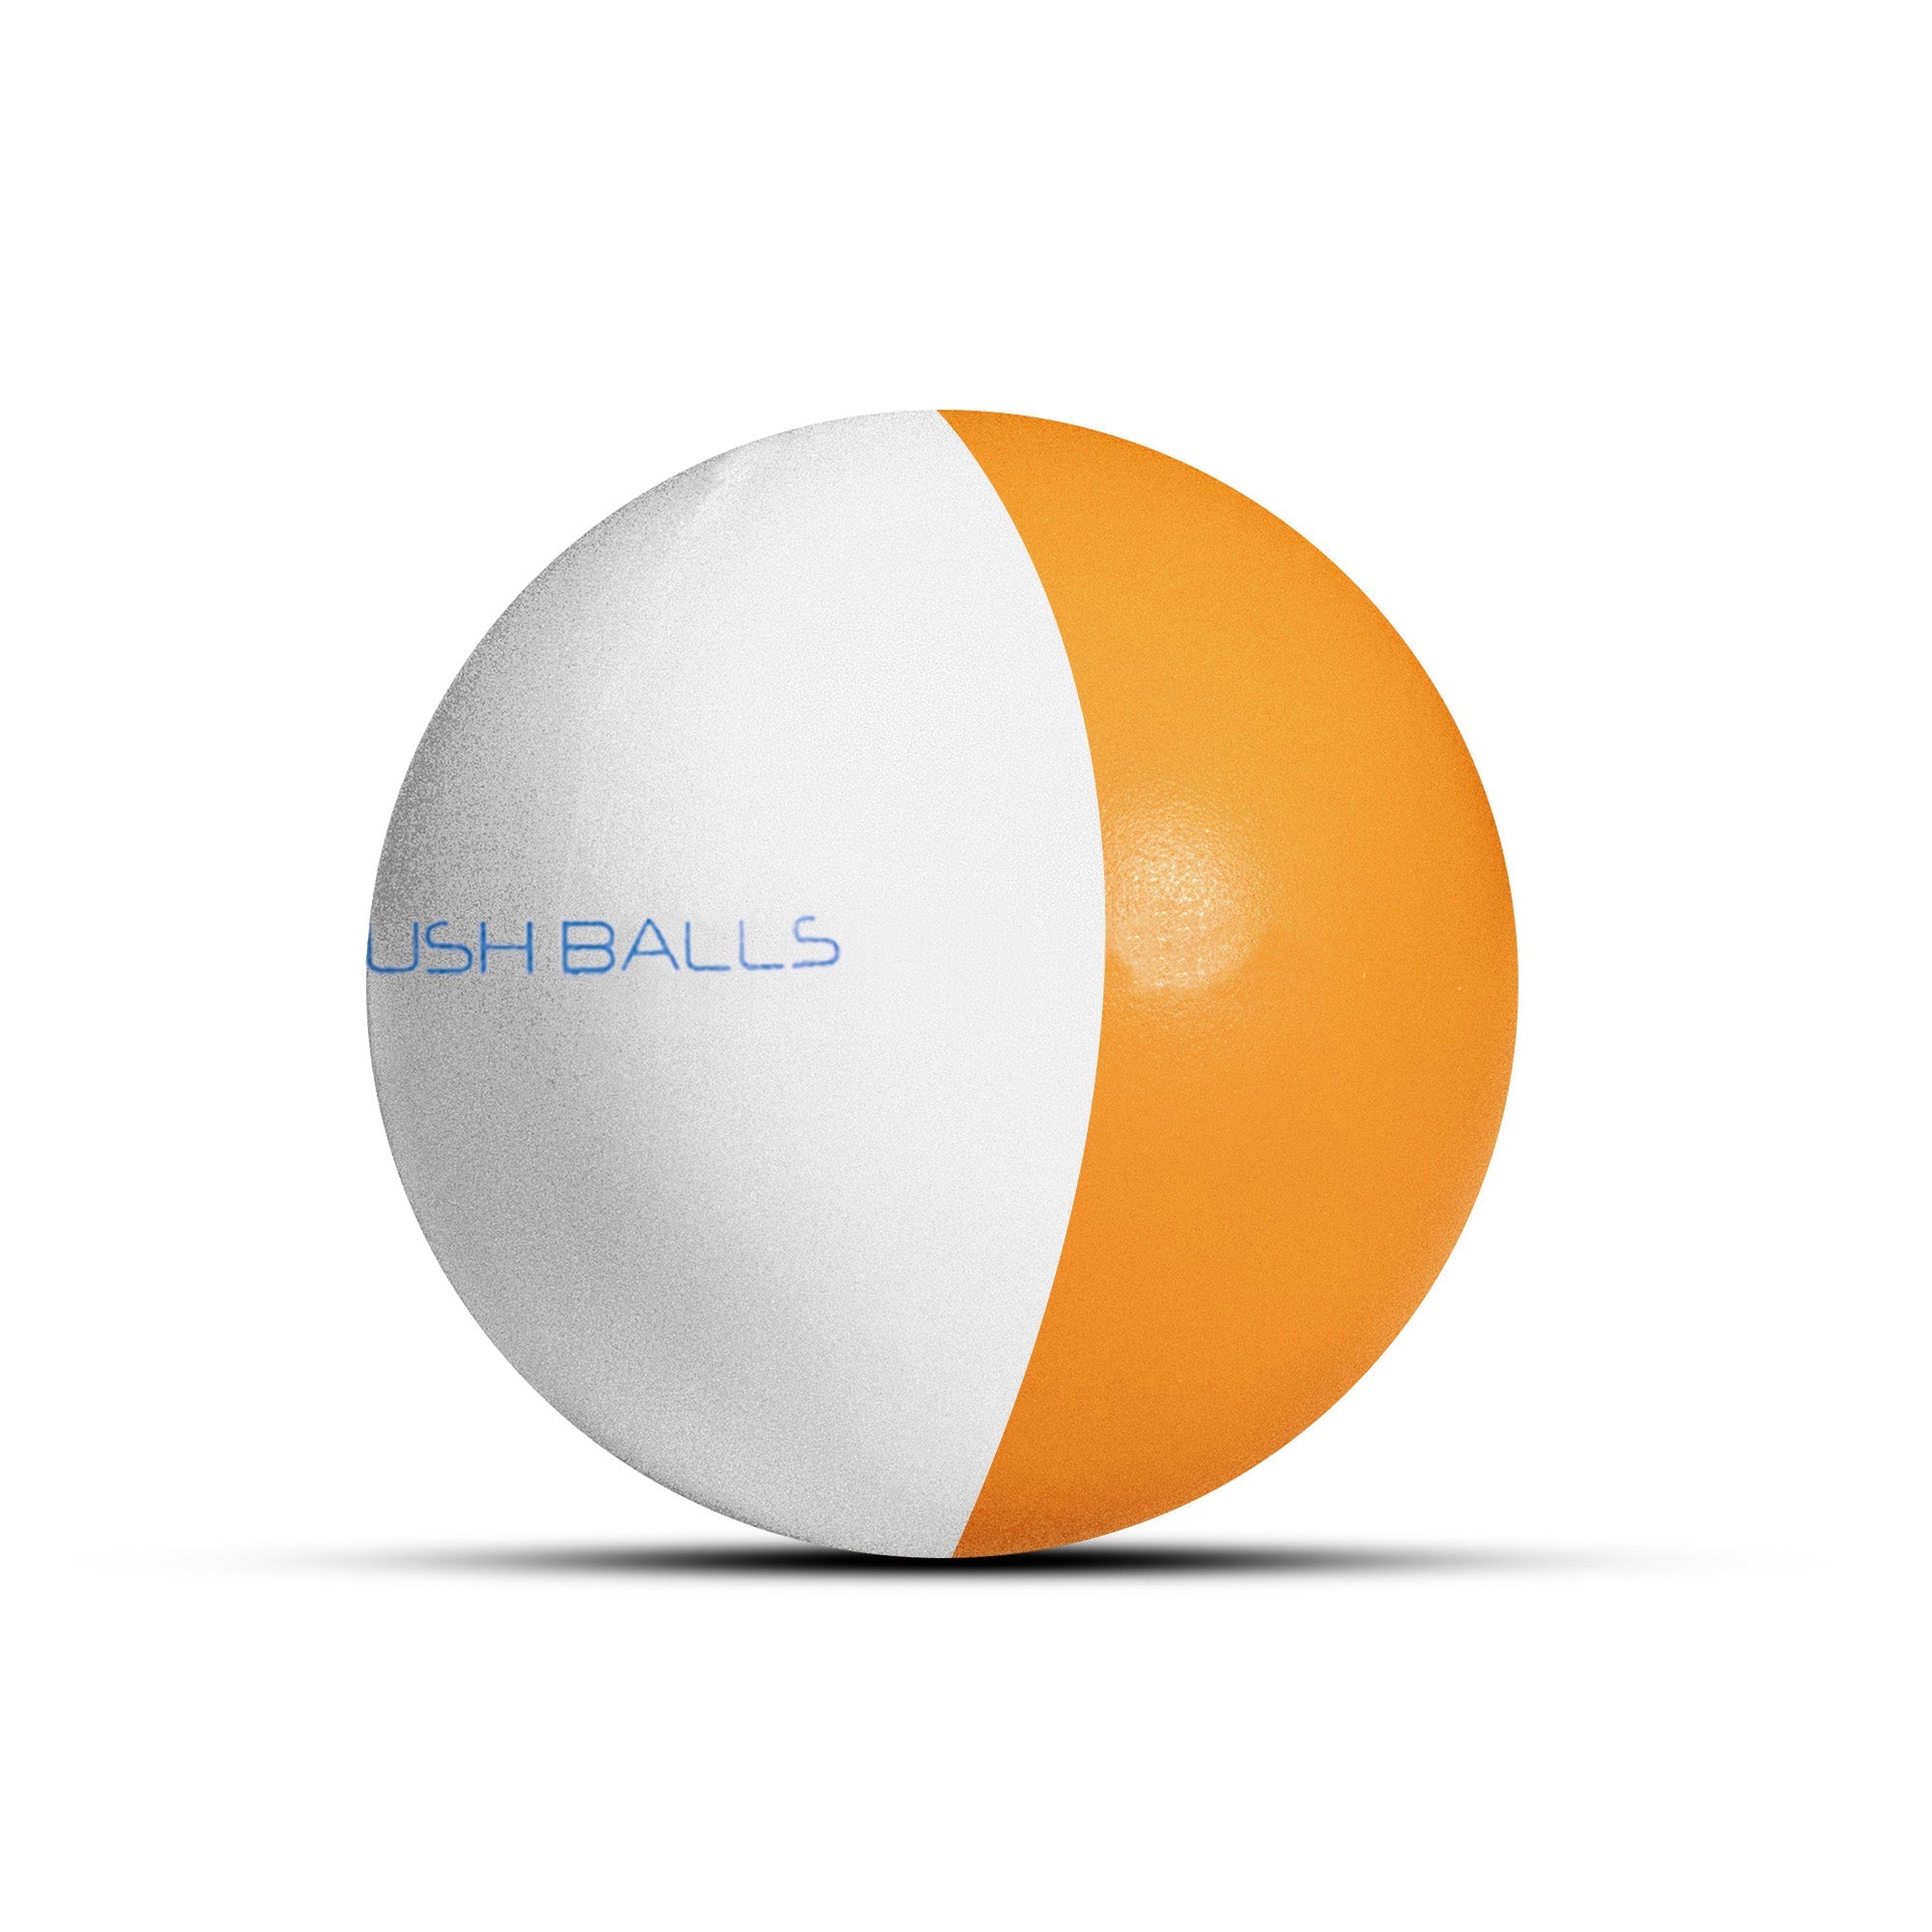 Two-Tone Smushballs